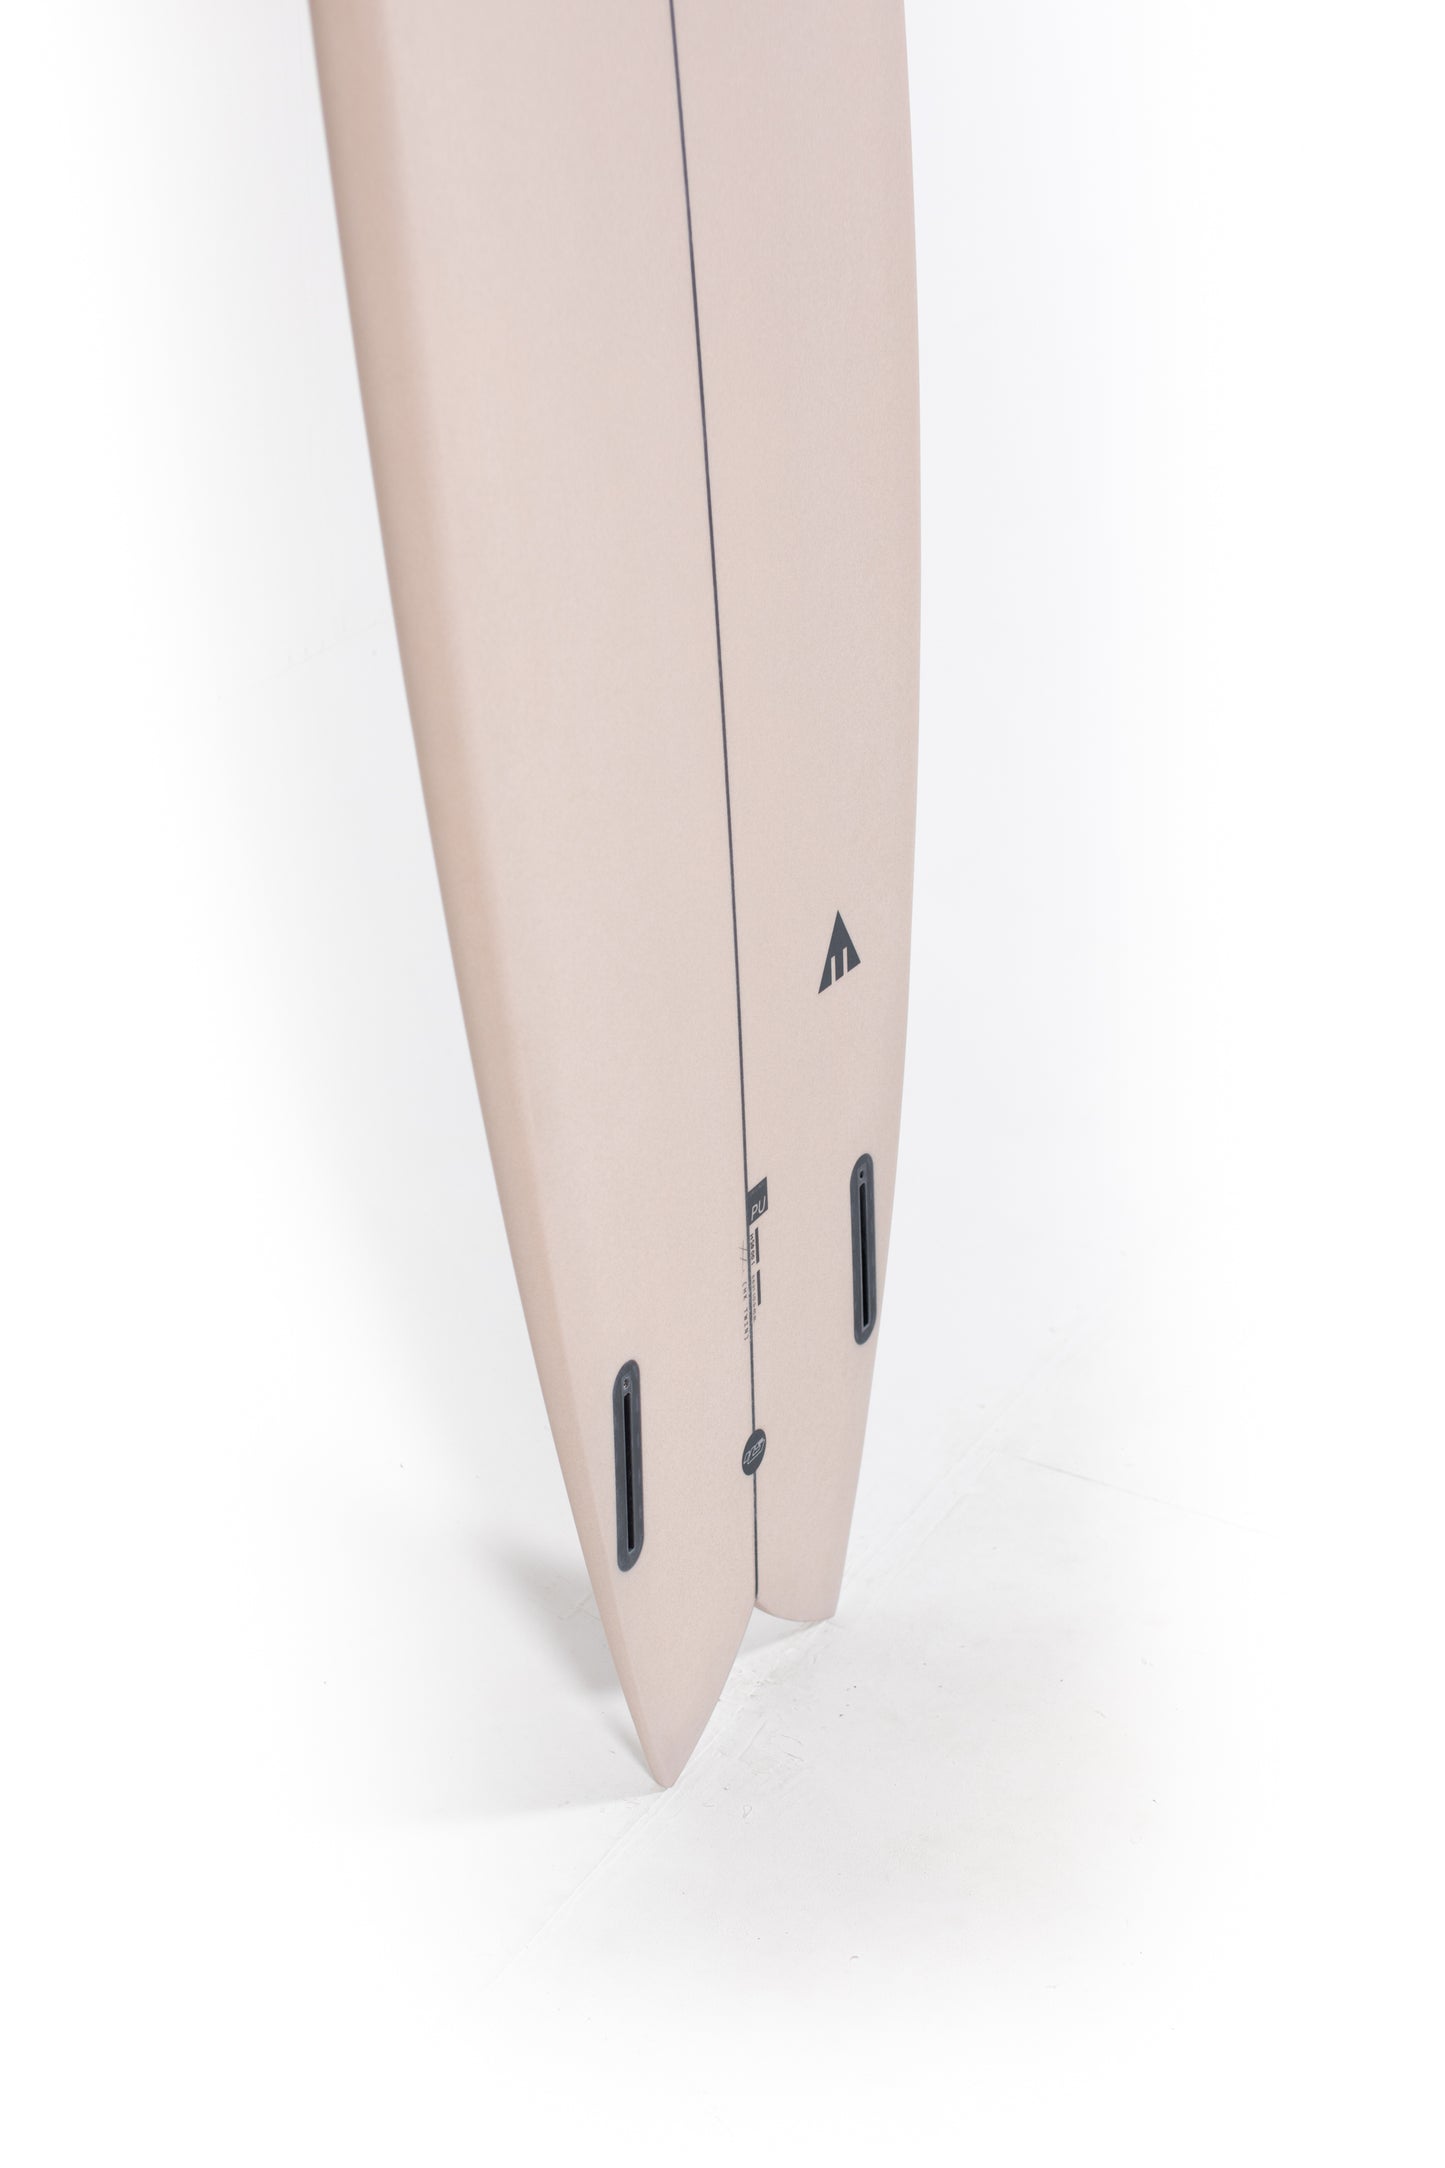 
                  
                    Pukas Surf Shop - HaydenShapes Surfboard - HYPTO KRYPTO TWIN PU - 6'6" X 21 1/2" X 3" - 45.8L
                  
                